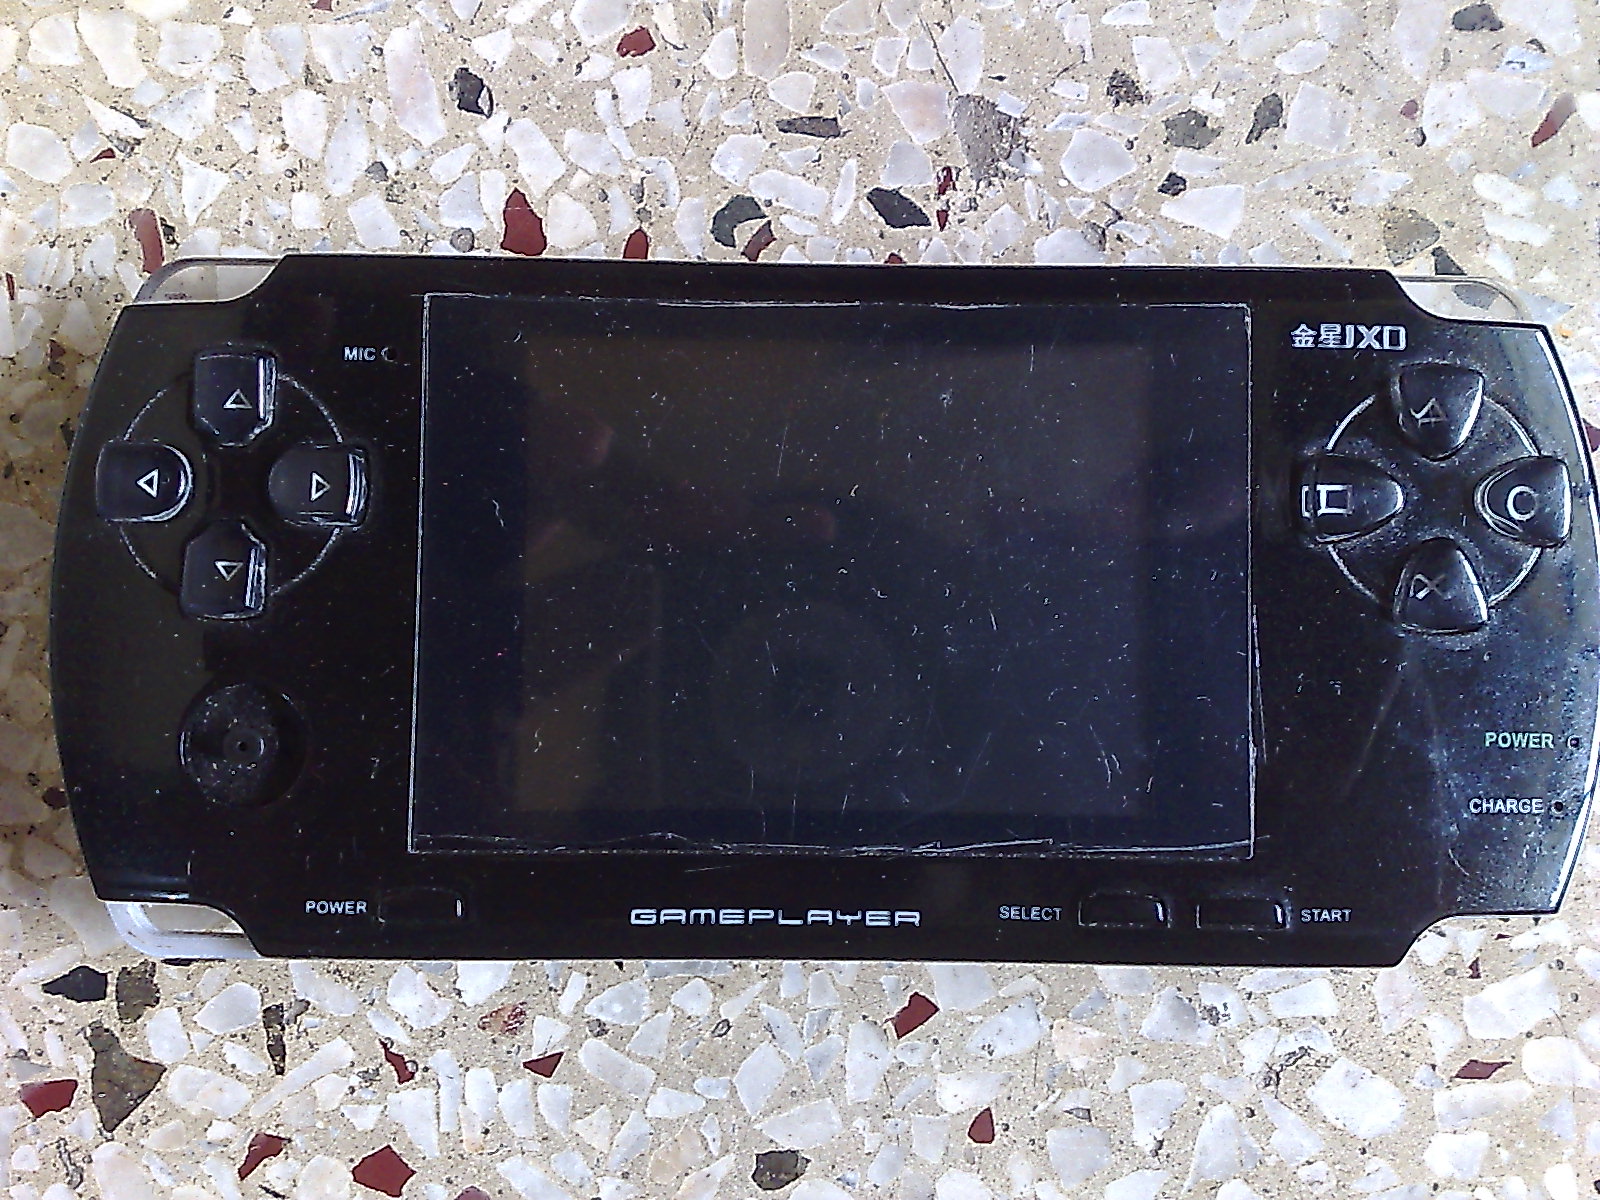 Portable stylish MP6 player large image 1